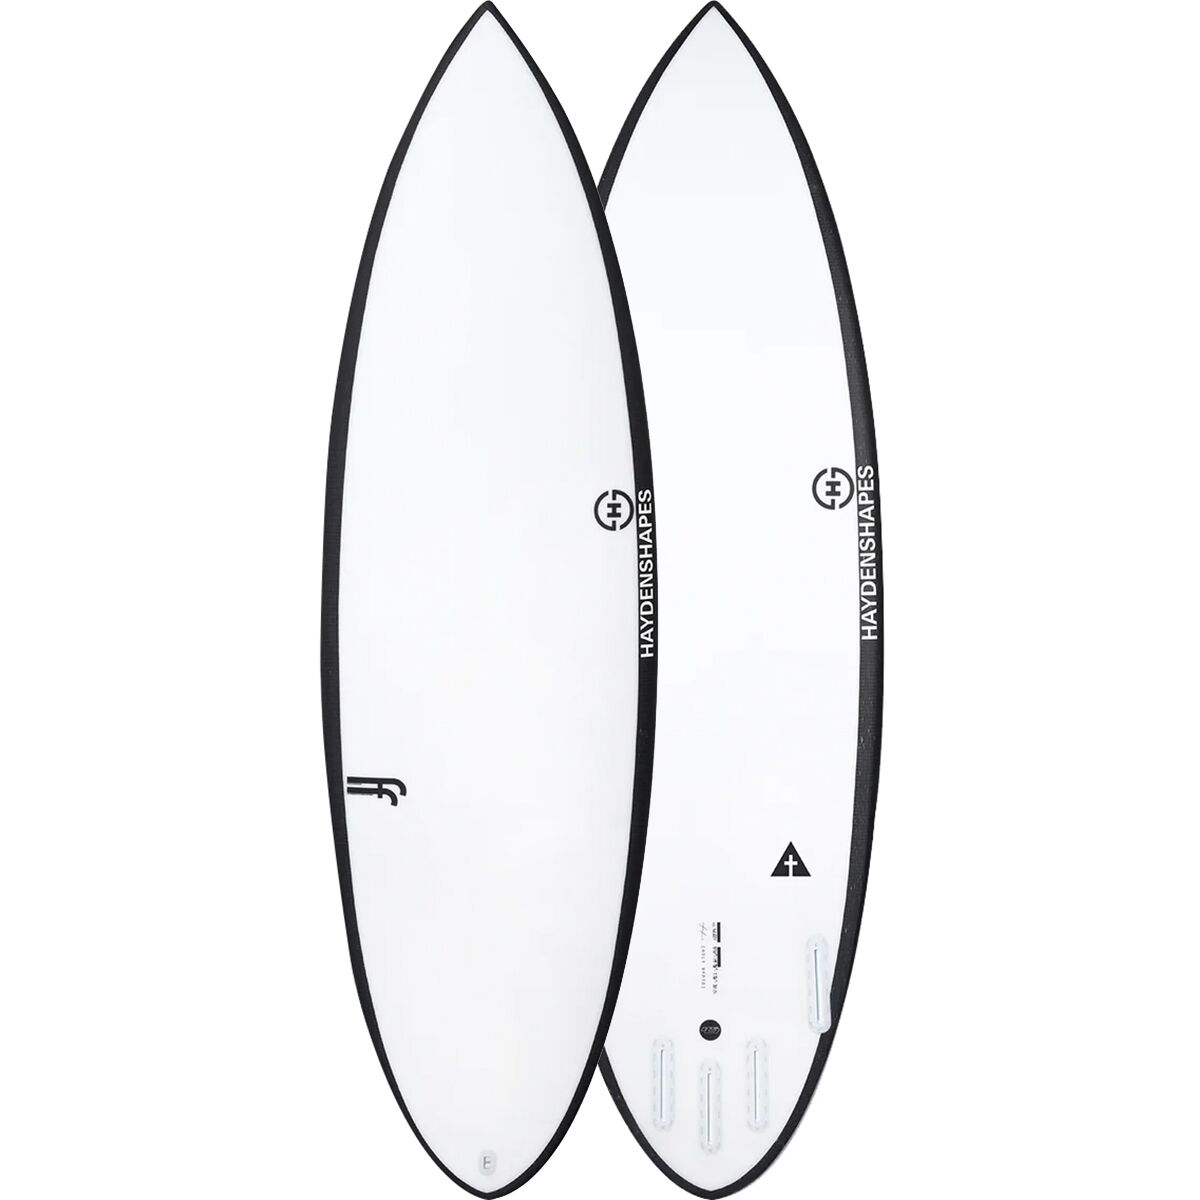 Haydenshapes Holy Hypto FutureFlex - FCSII 5 Fin Surfboard